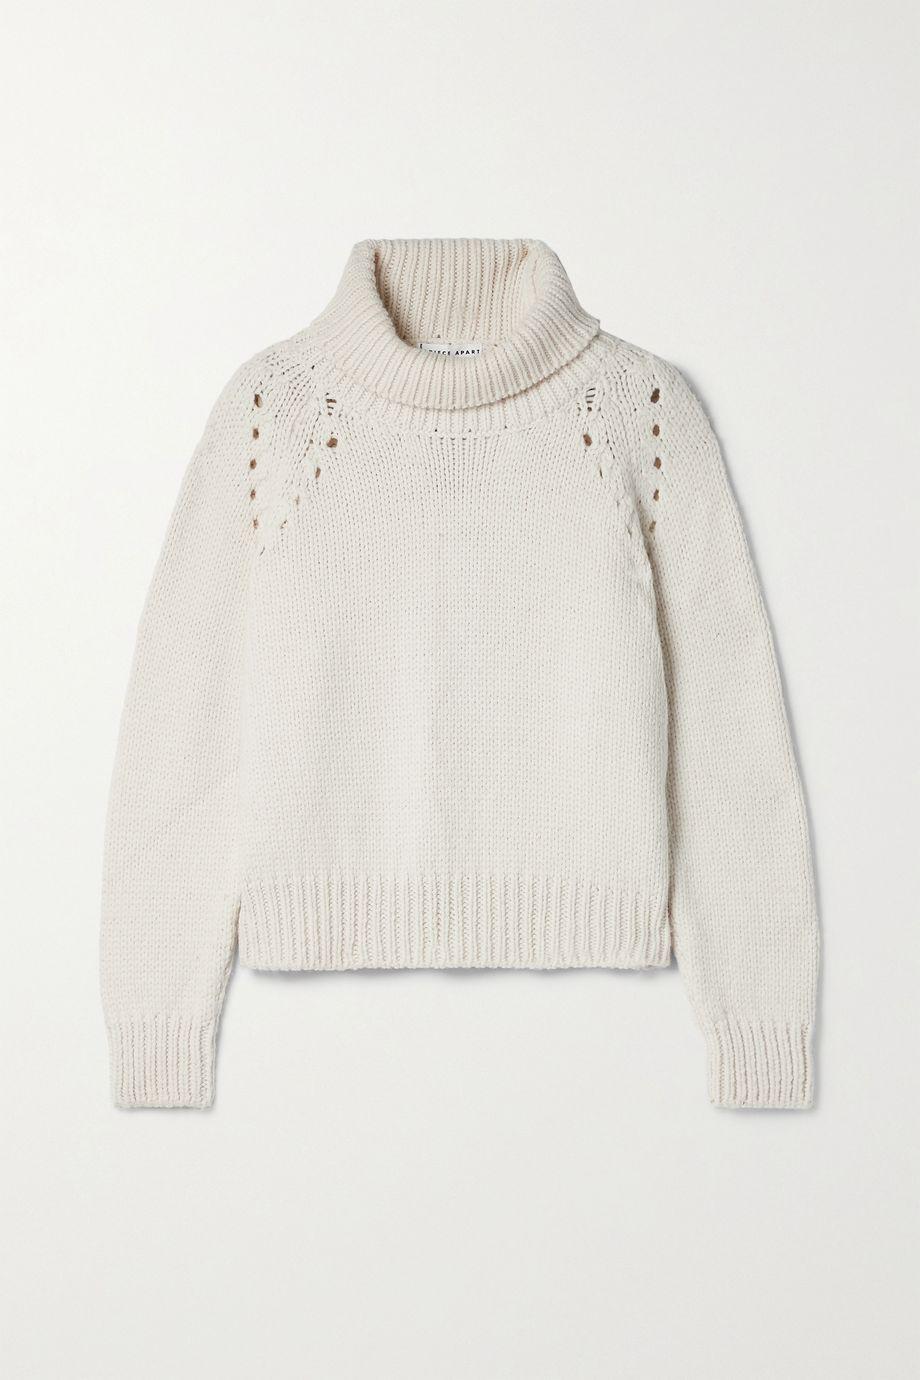 Ronia merino wool turtleneck sweater by APIECE APART